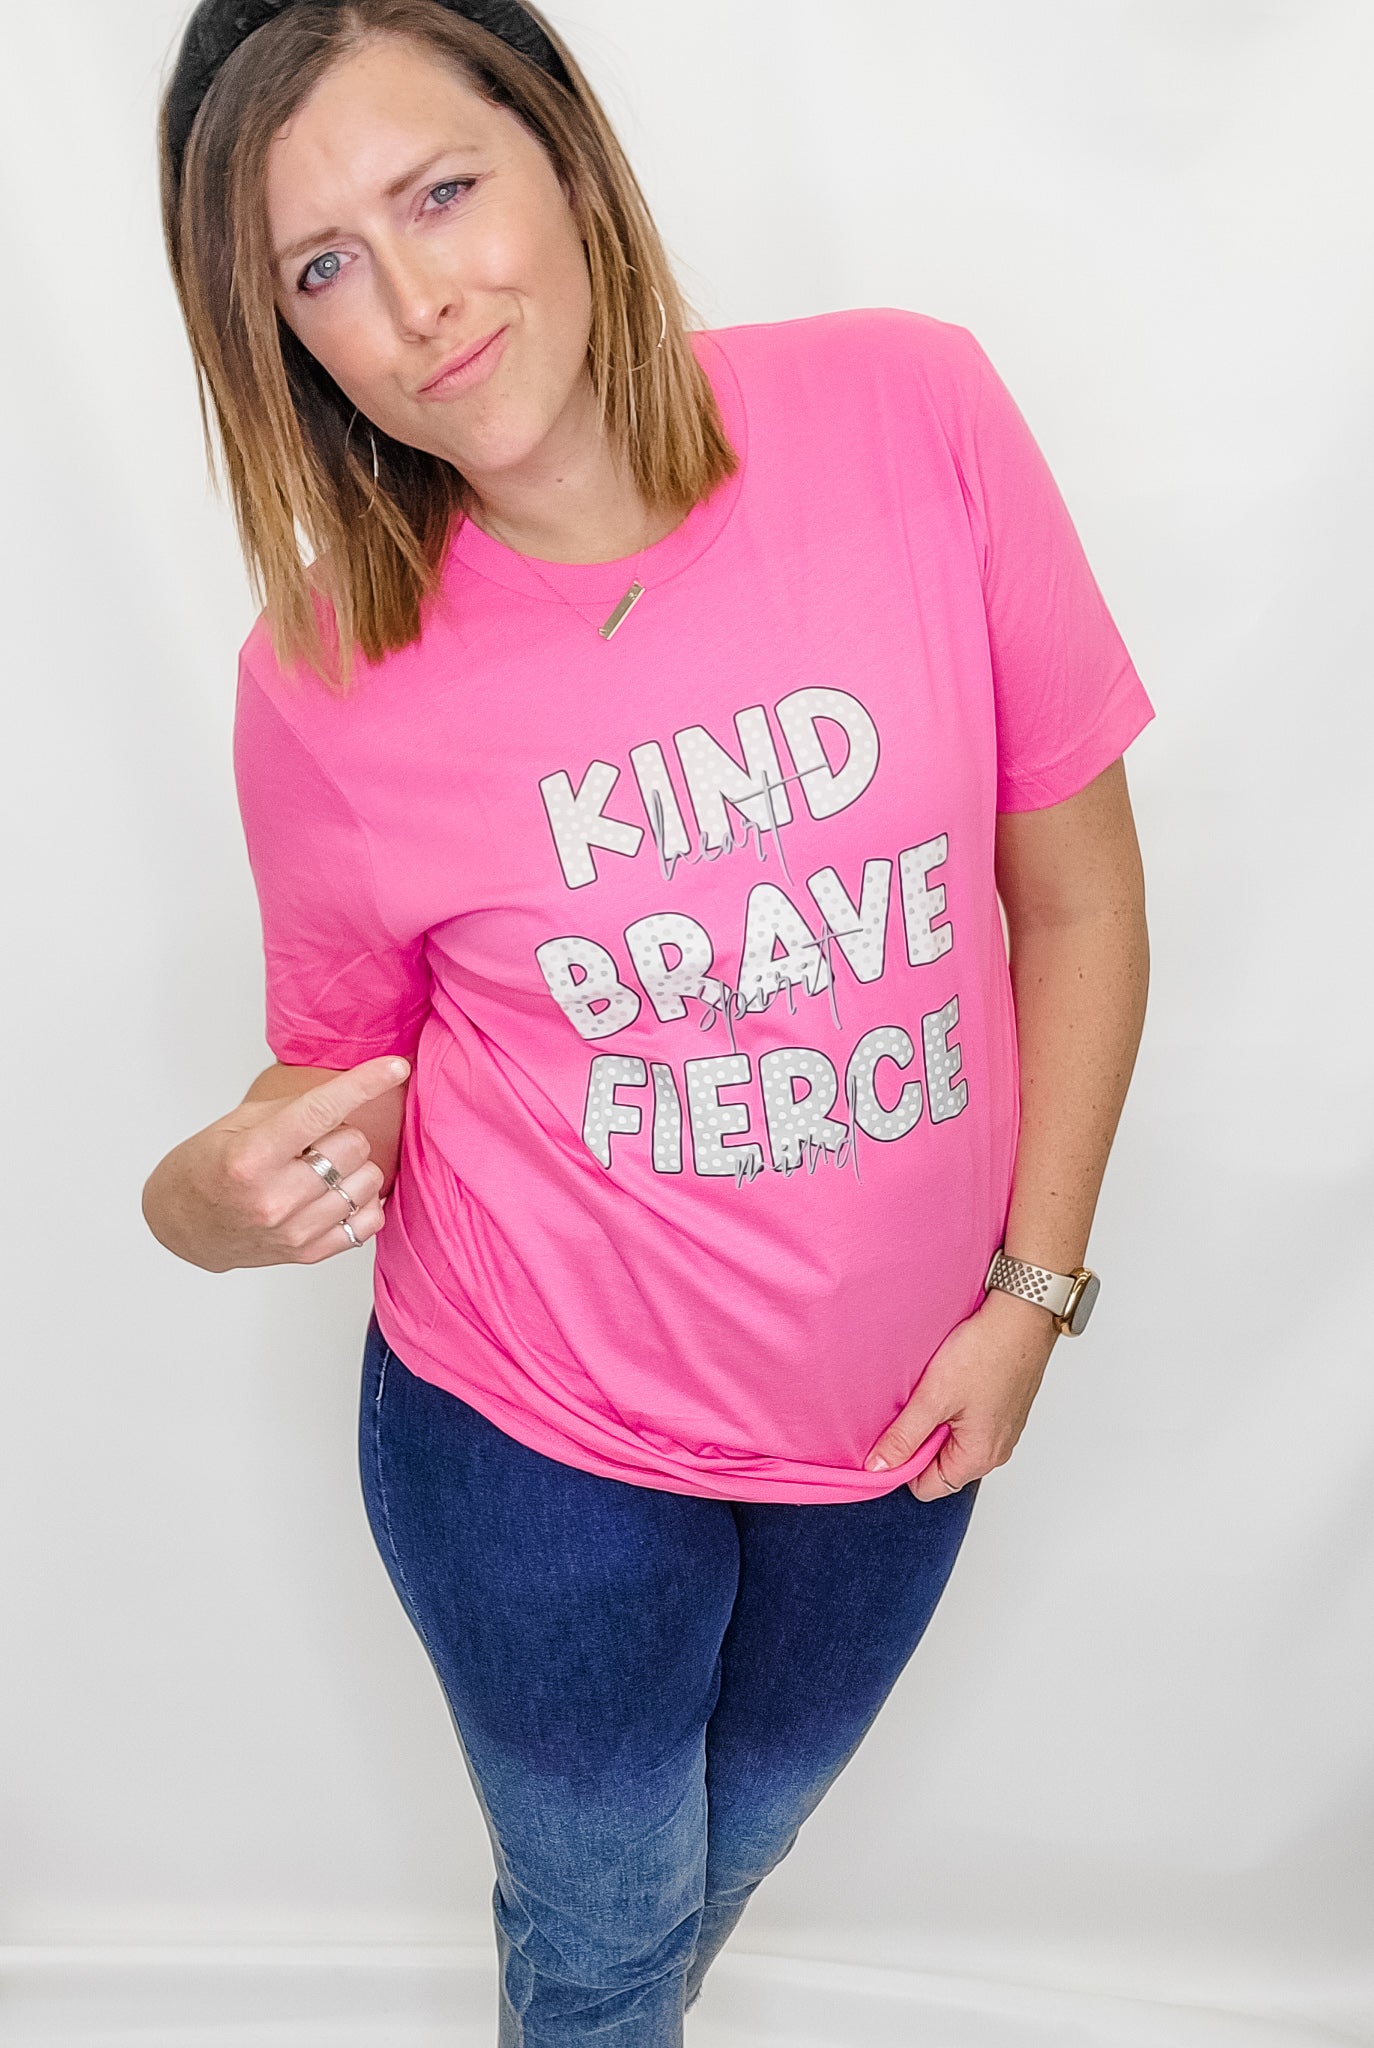 Kind, Brave & Fierce Pink Graphic Tee